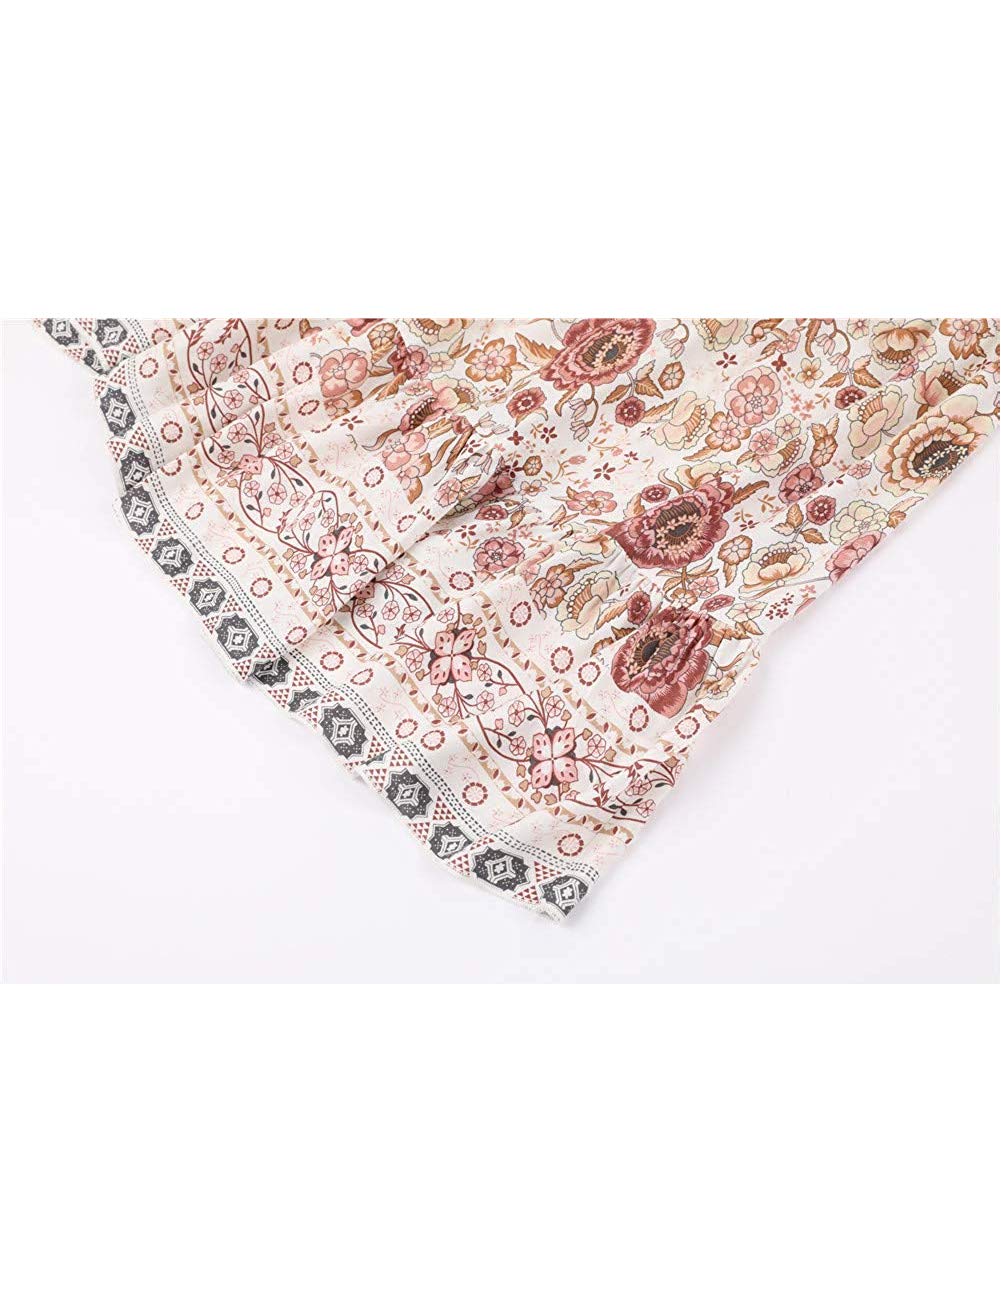 MEROKEETY Women's Boho Floral Print Elastic High Waist Pleated A Line Midi Skirt